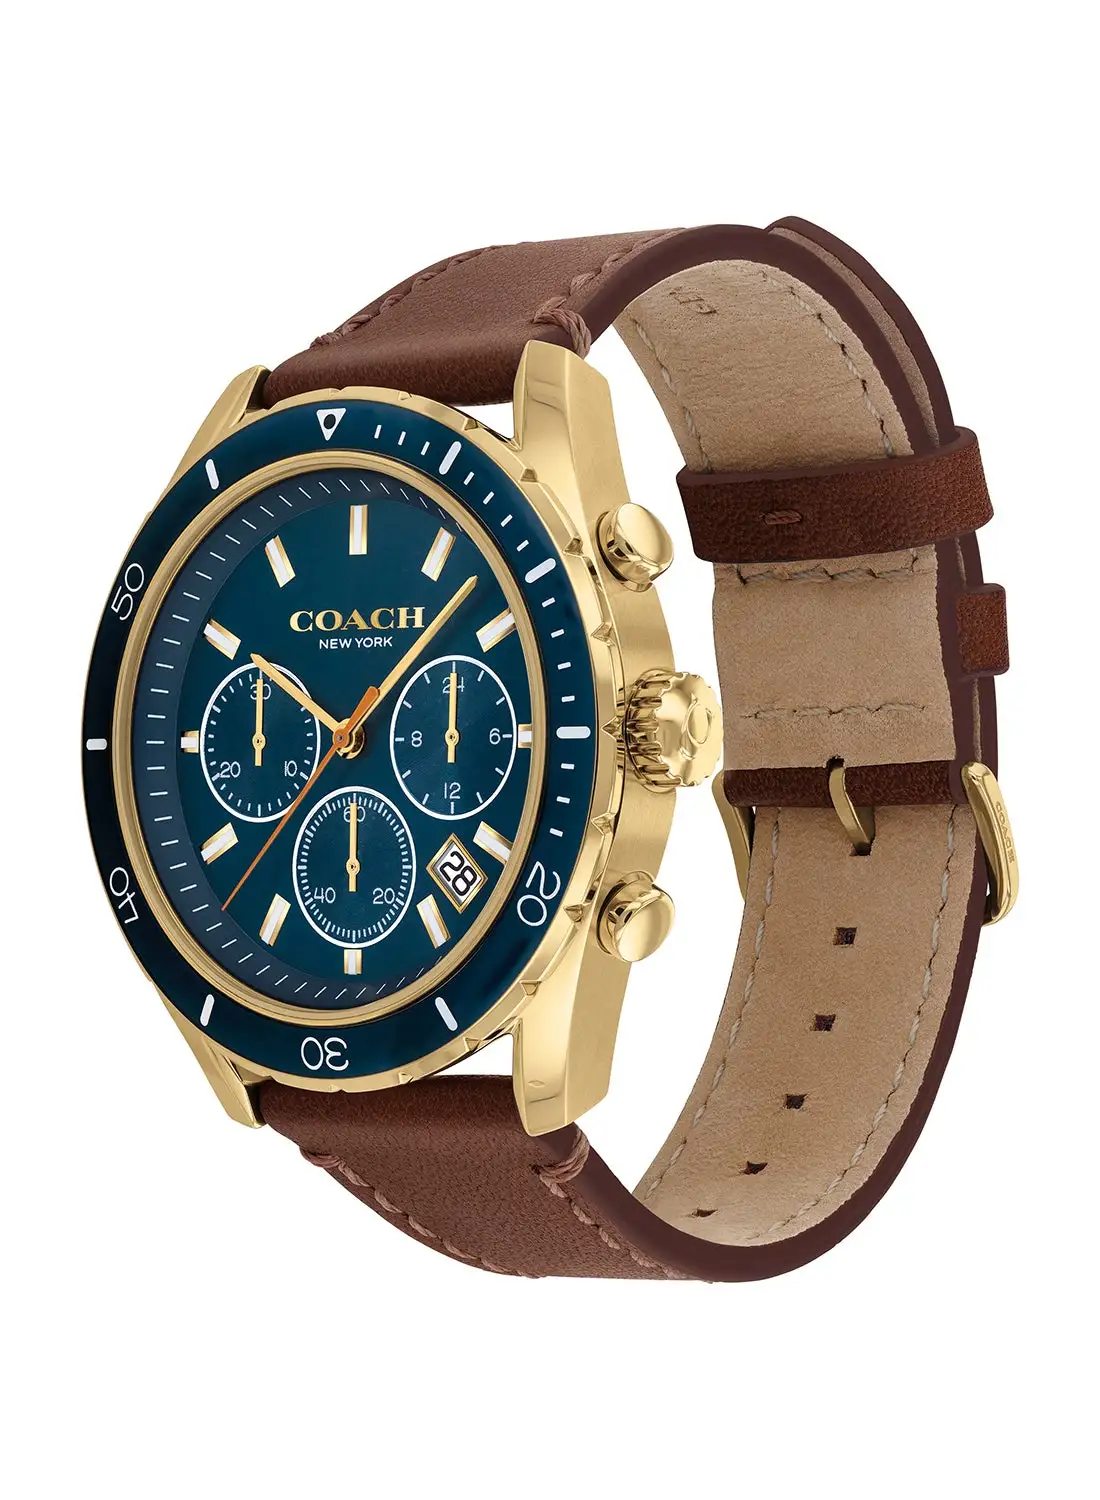 COACH Men's Chronograph Round Shape Leather Wrist Watch 14602513 - 44 Mm